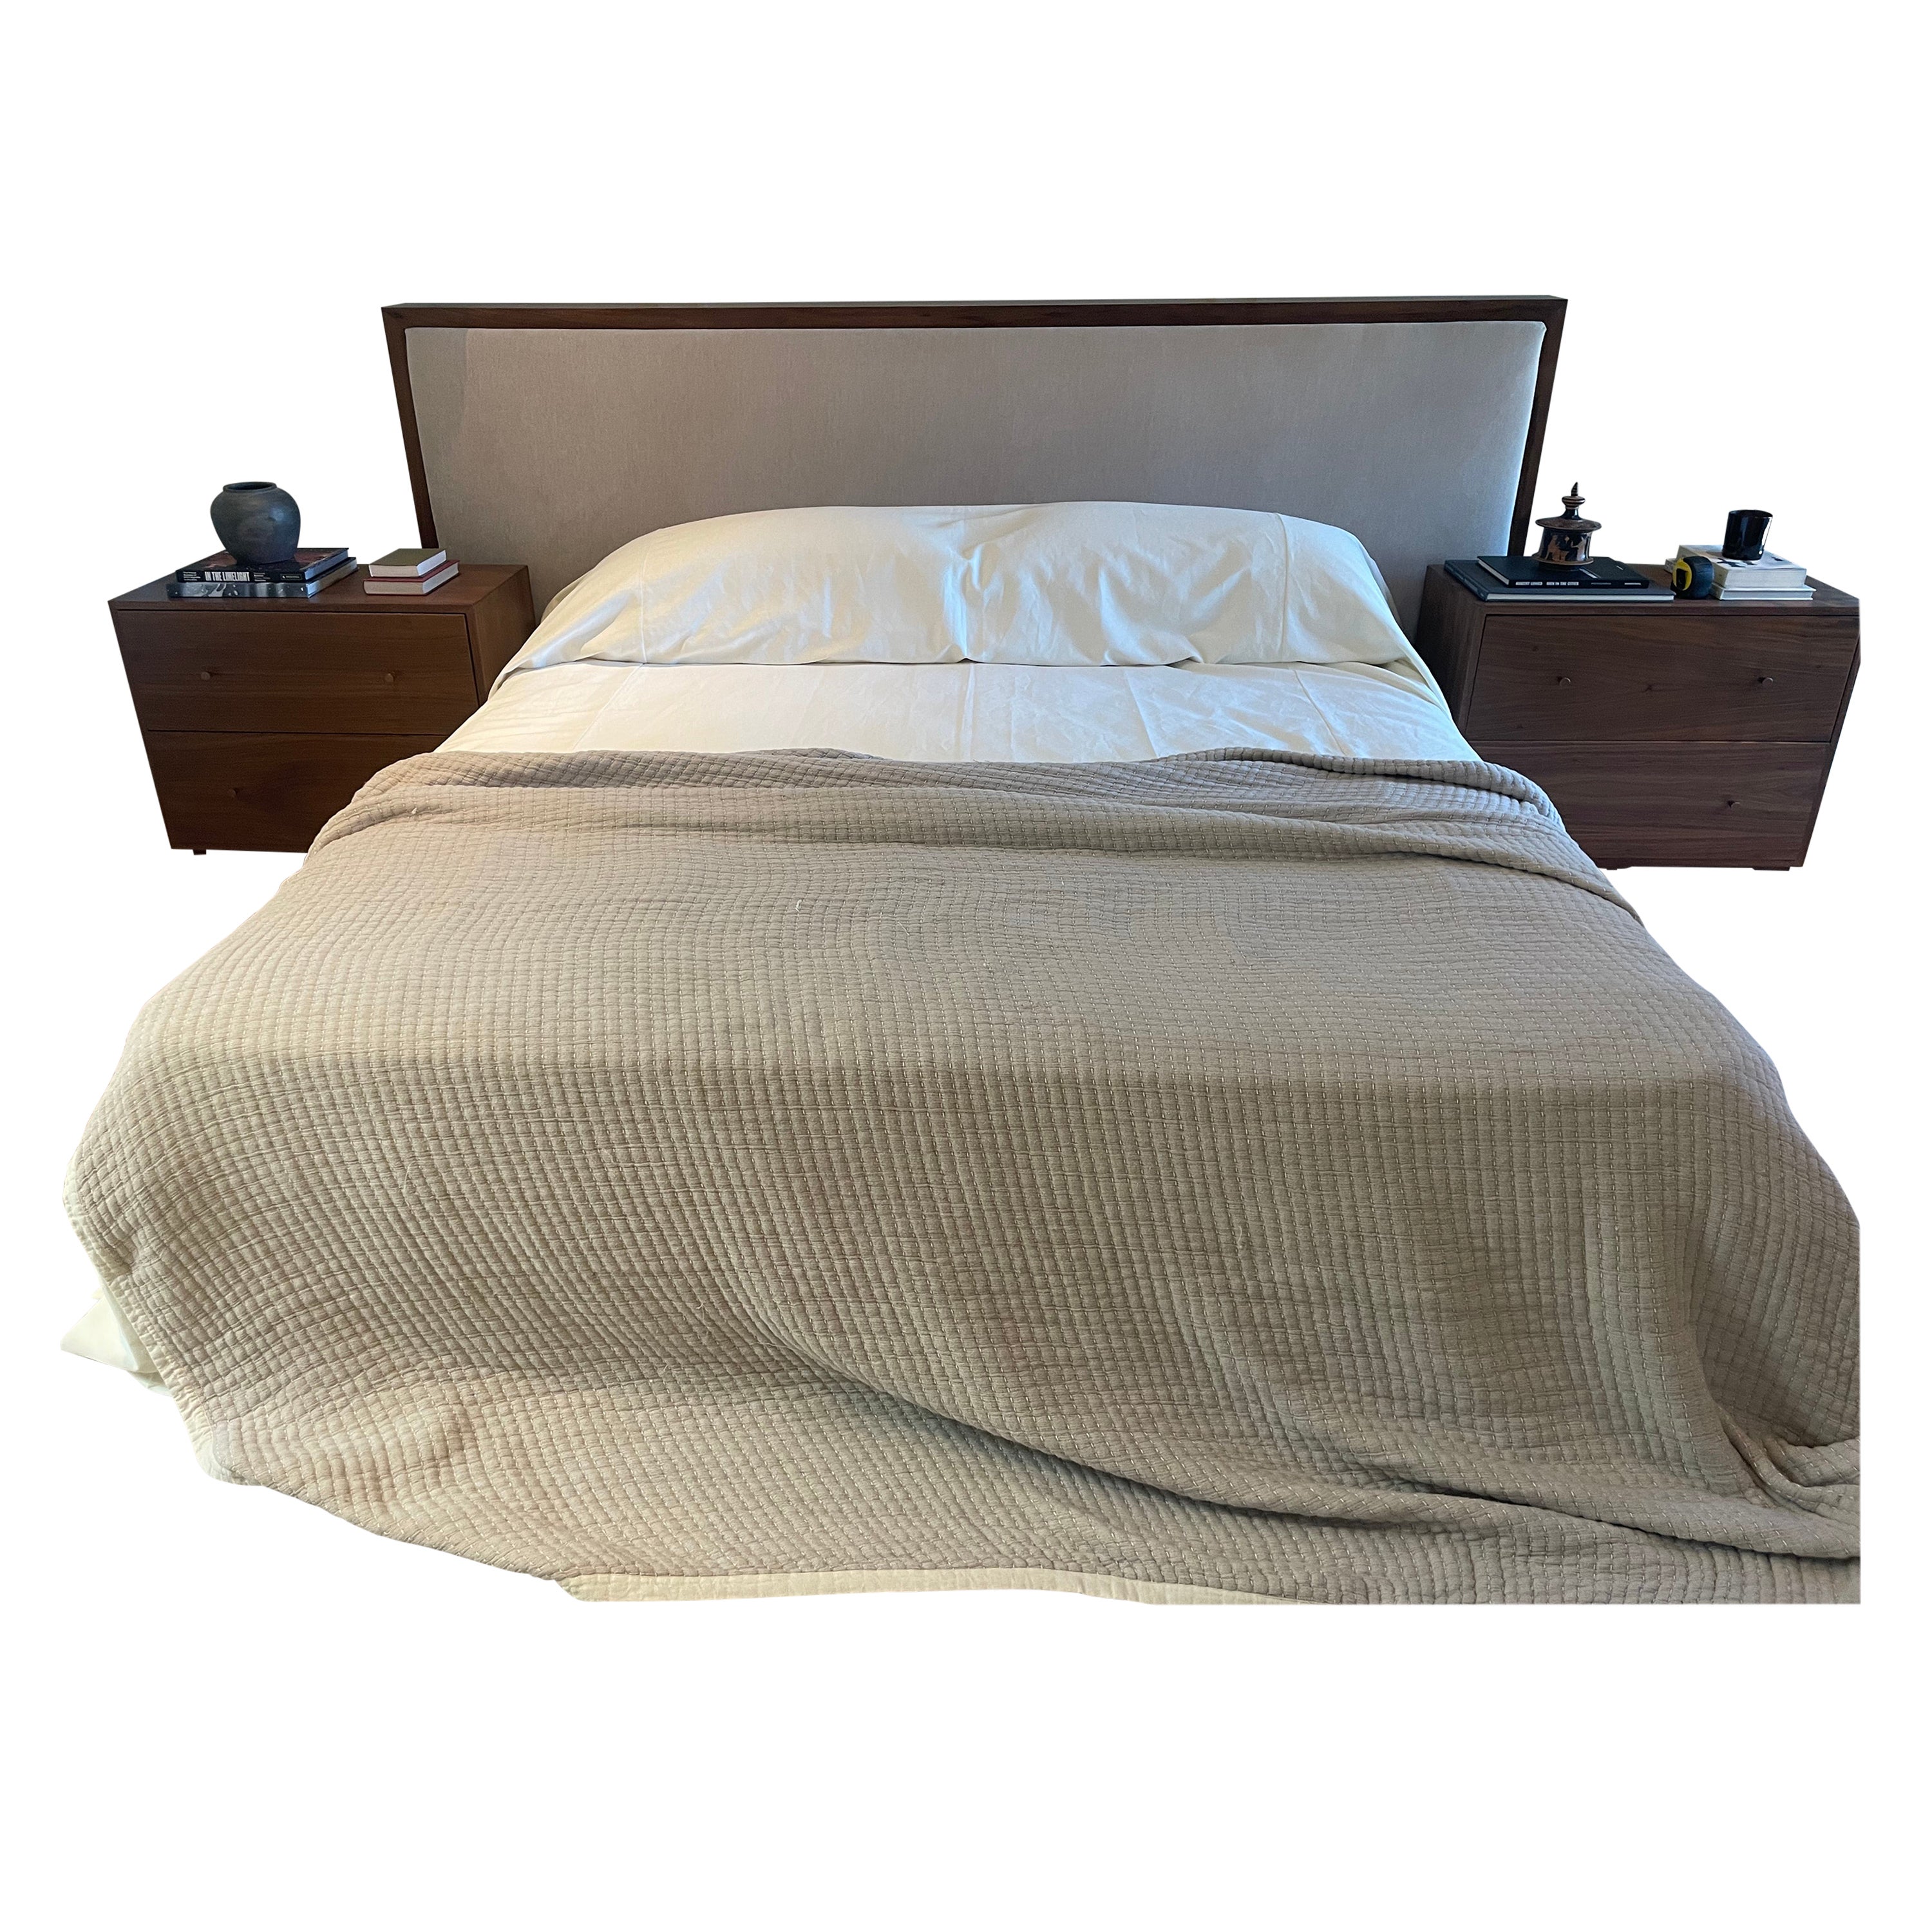 Kingsize-Bett in kaffeefarbenem Nussbaum, Kopfteil aus versilbertem weißem Mohair